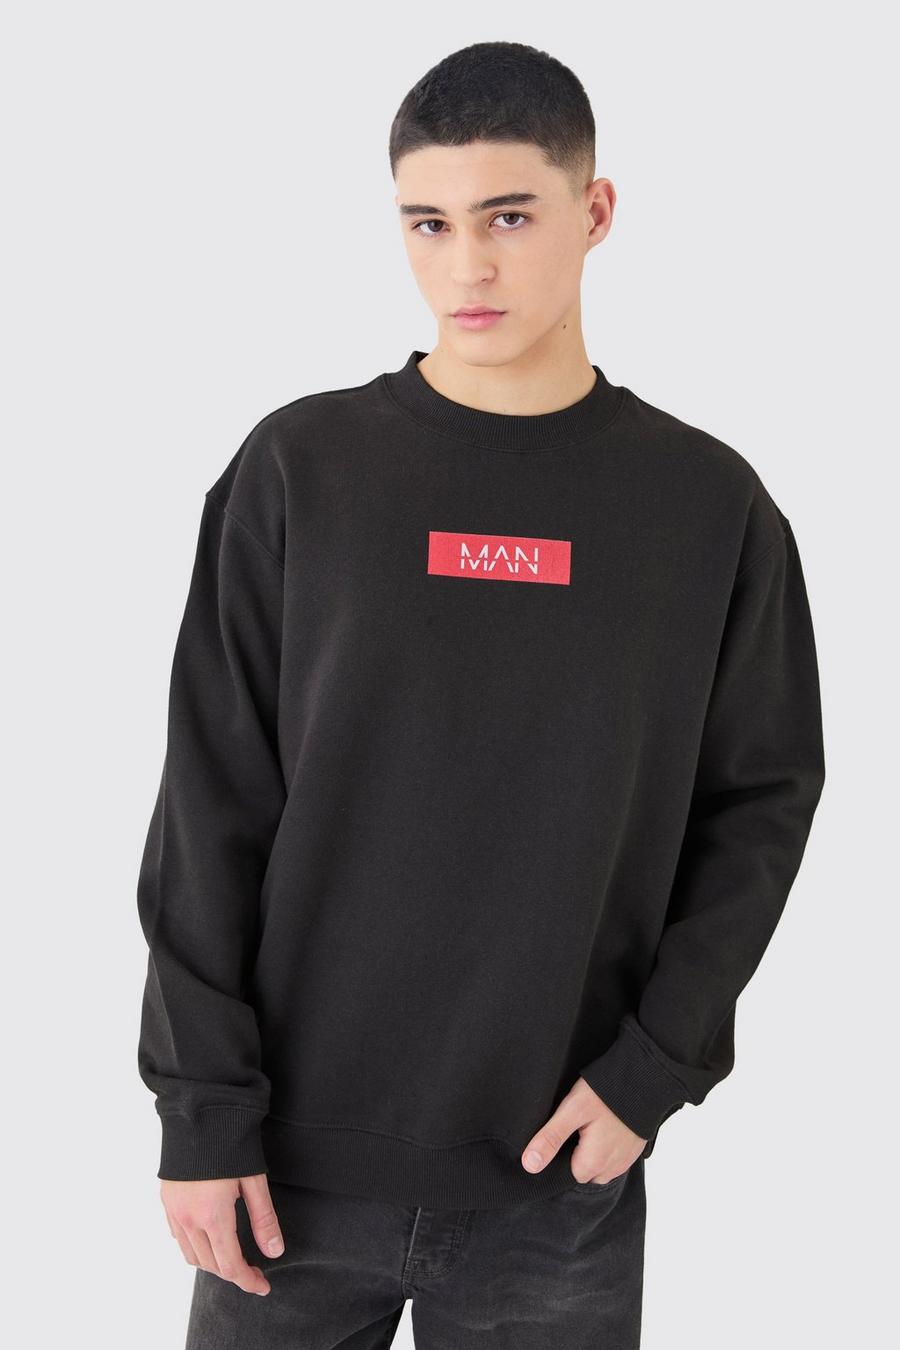  Sweatshirt mit Man-Print, Black